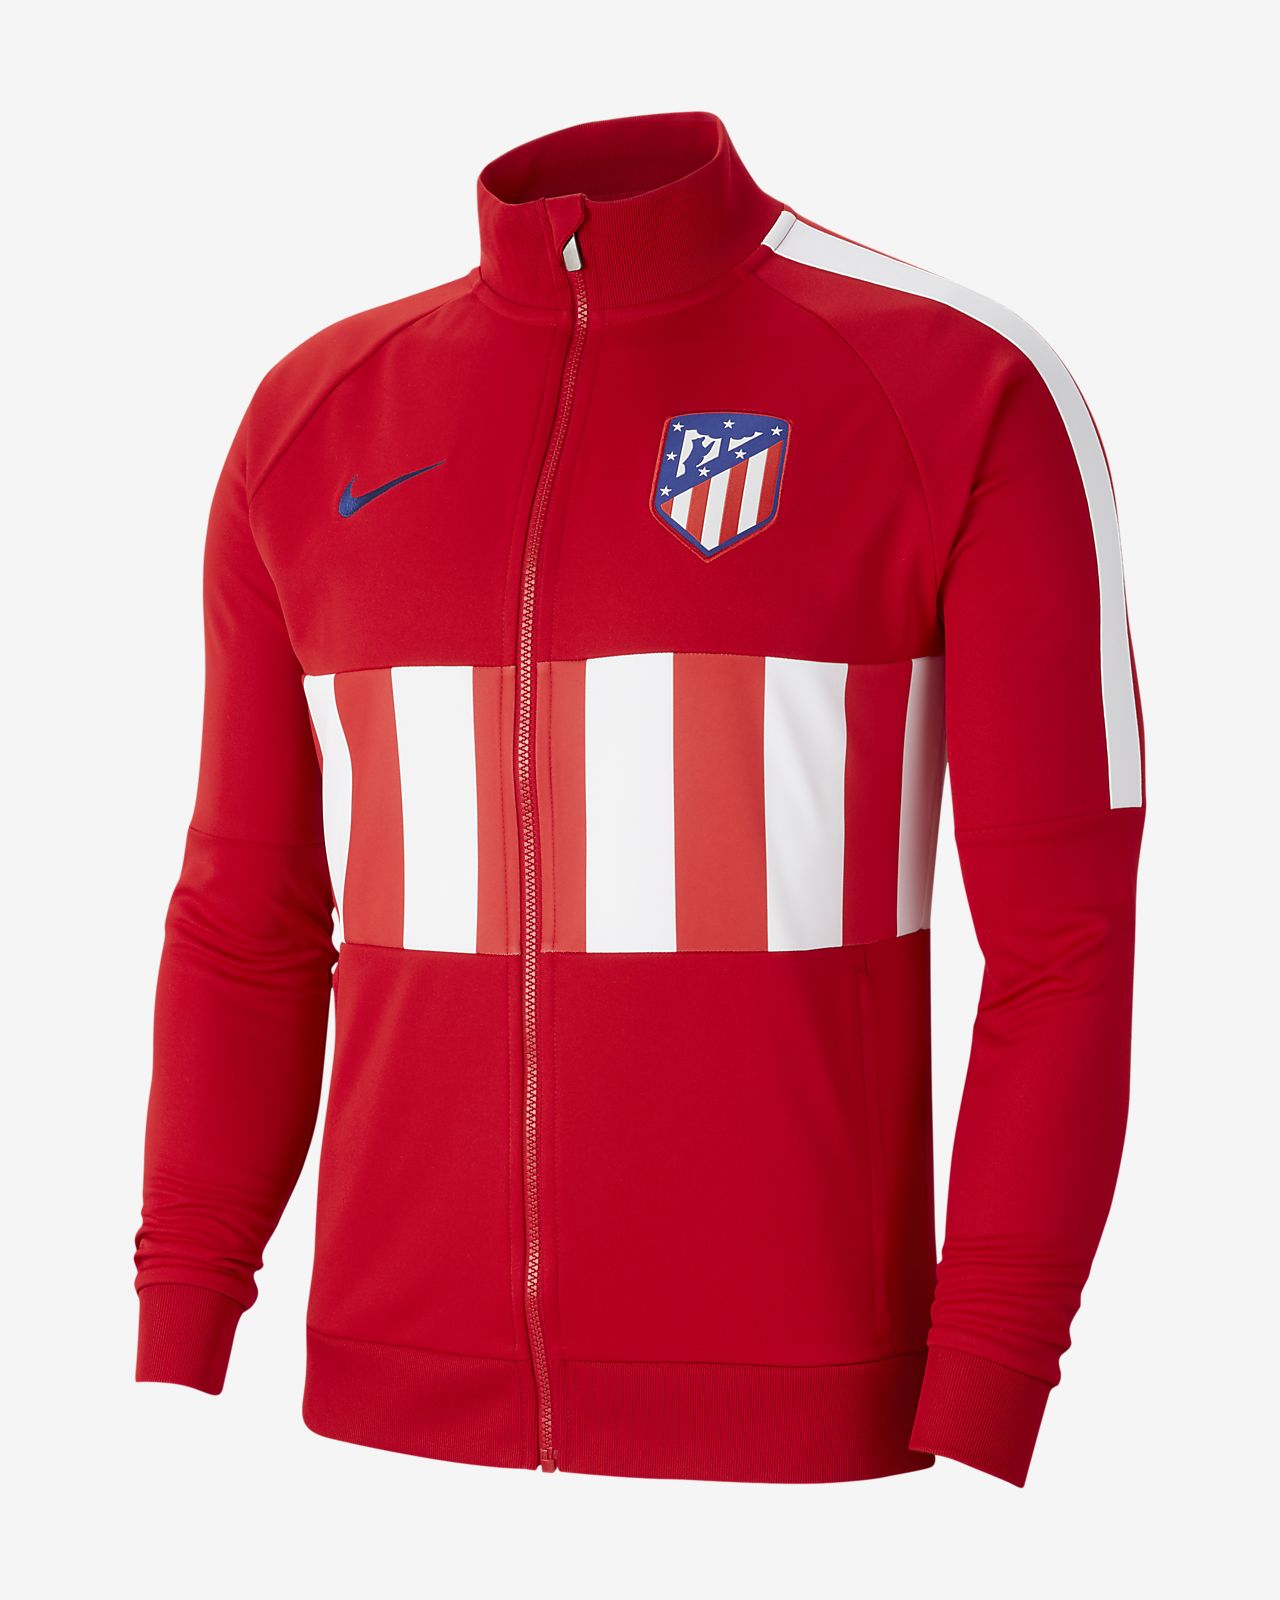 Atlético de Madrid Men's Jacket. Nike HR